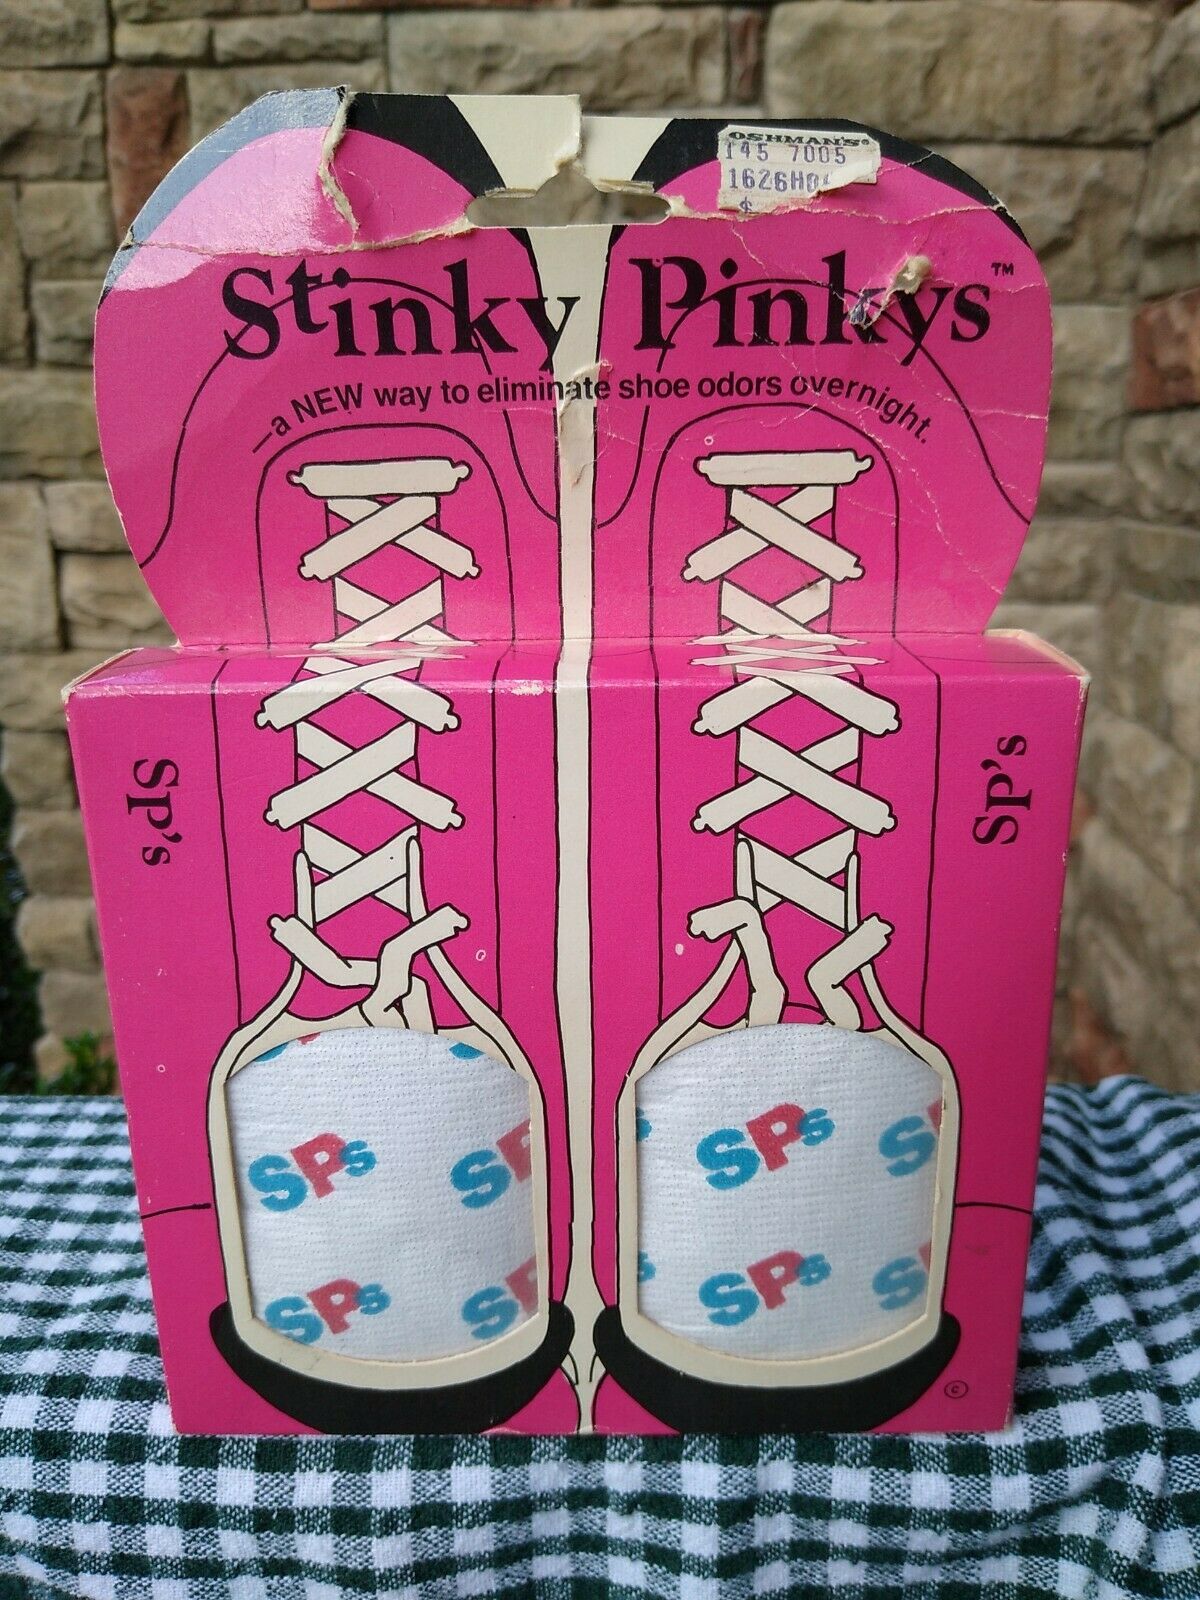 Vintage New Stinky Pinkys Overnight Shoe Odor Eliminator